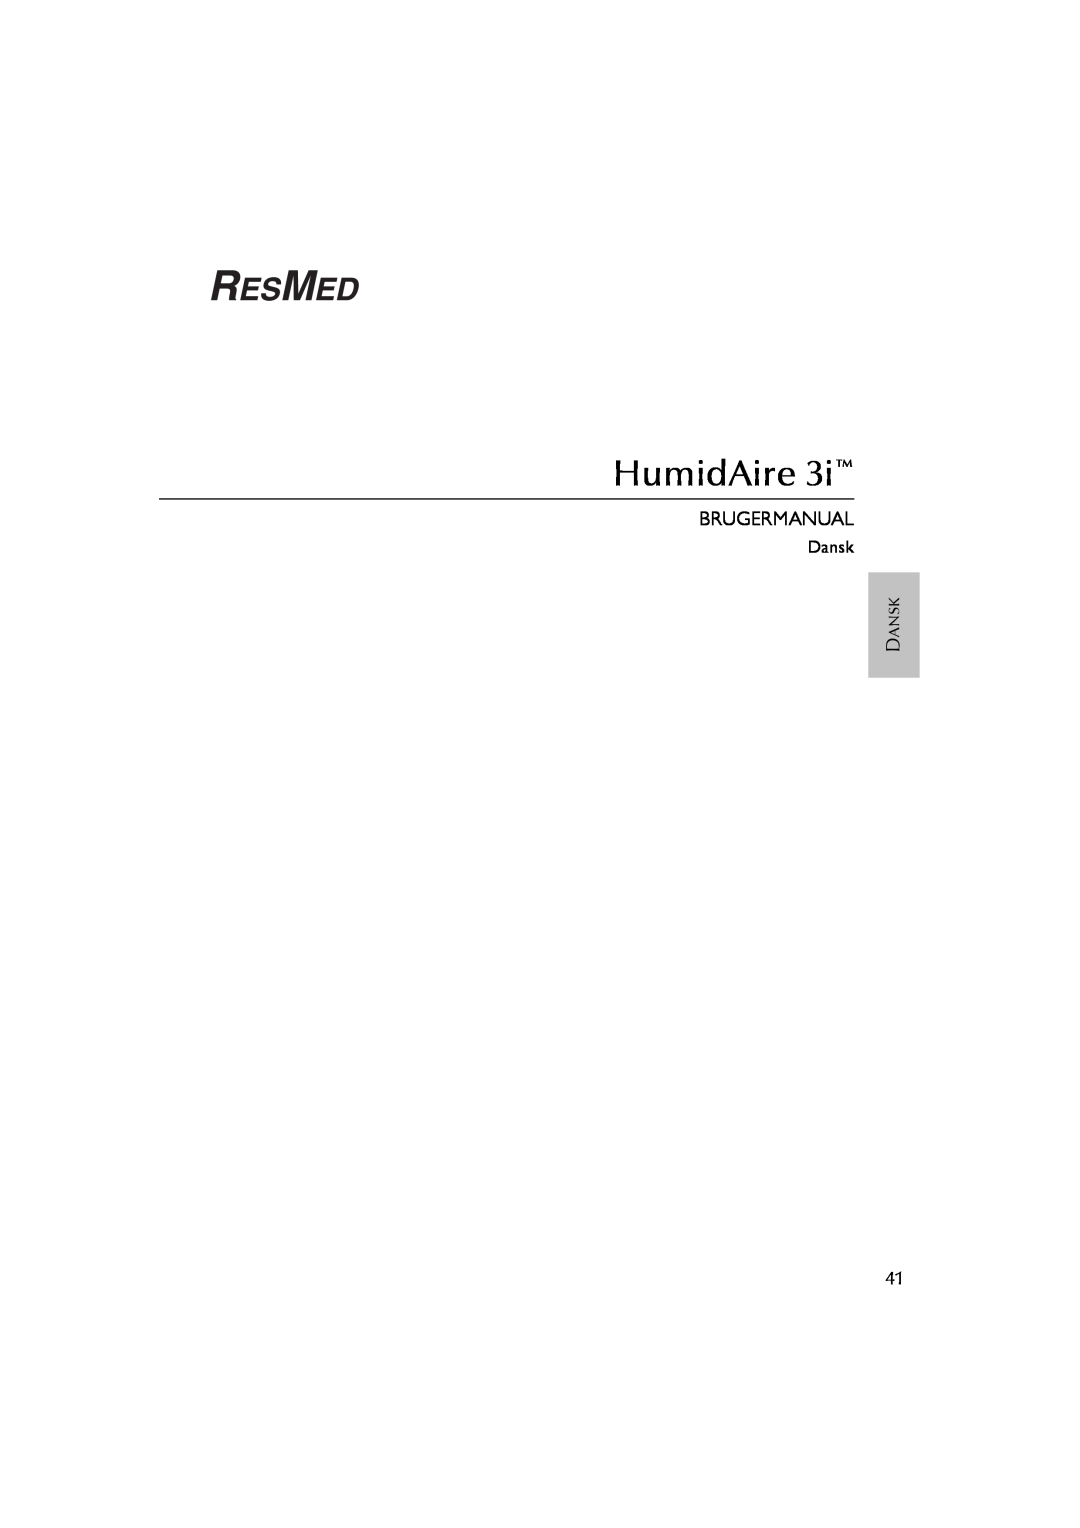 ResMed Humidifier user manual Brugermanual, HumidAire, Dansk 